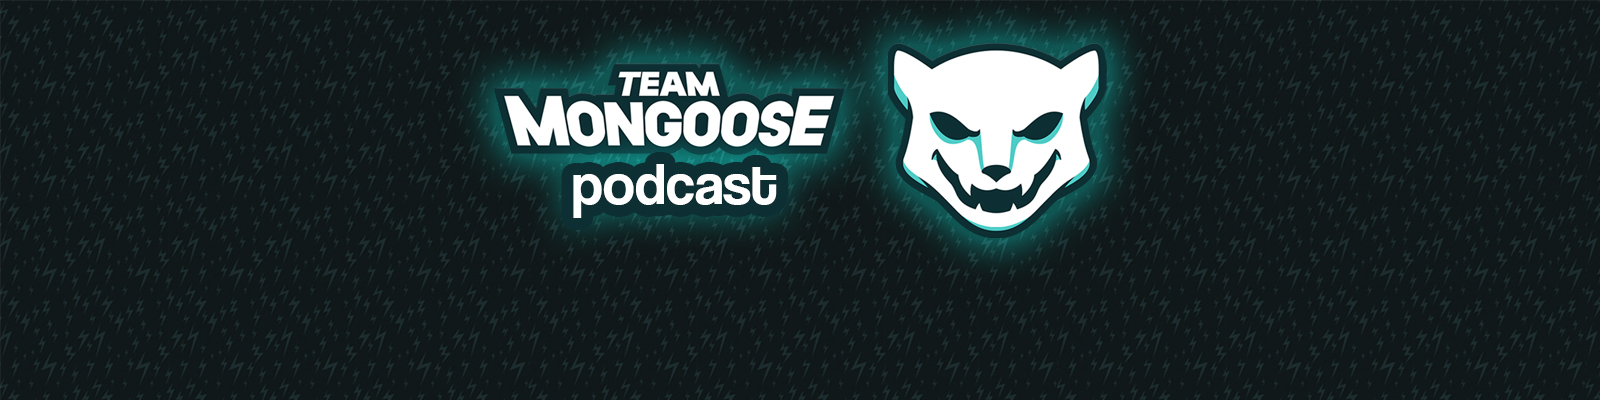 Team Mongoose Podcast